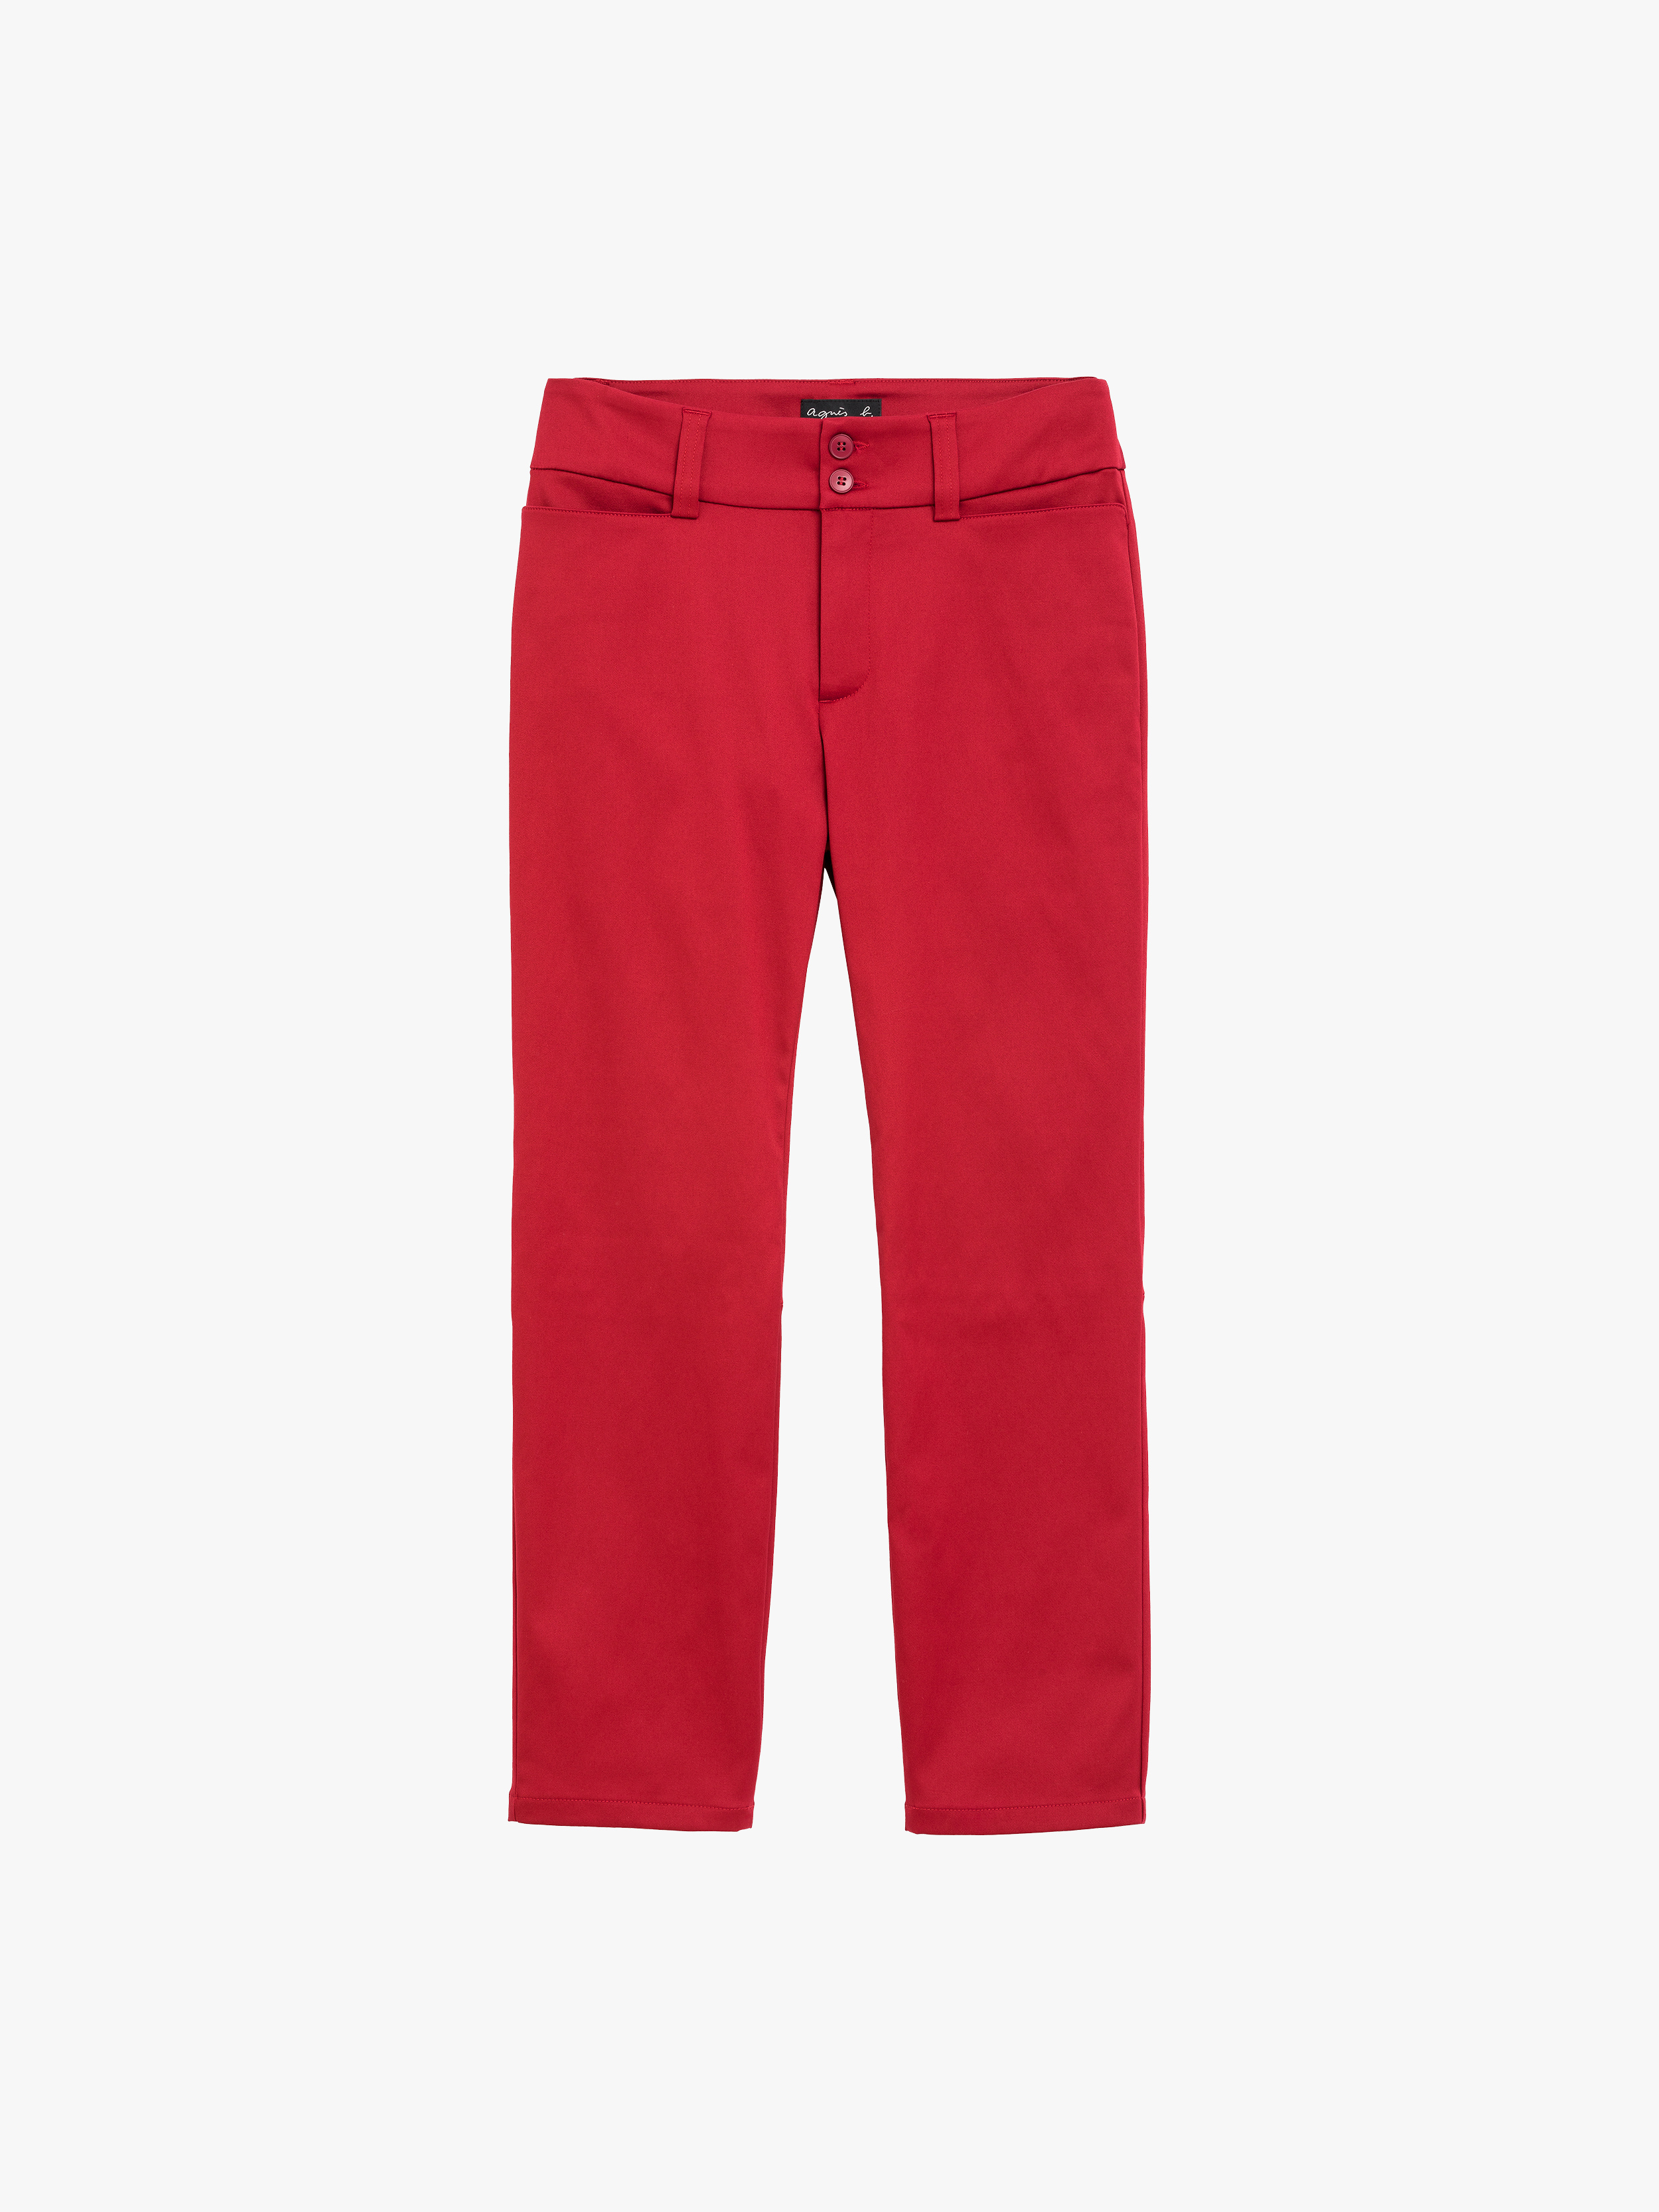 Red Rachelle Capris by Unique Vintage 50s style cropped trousers